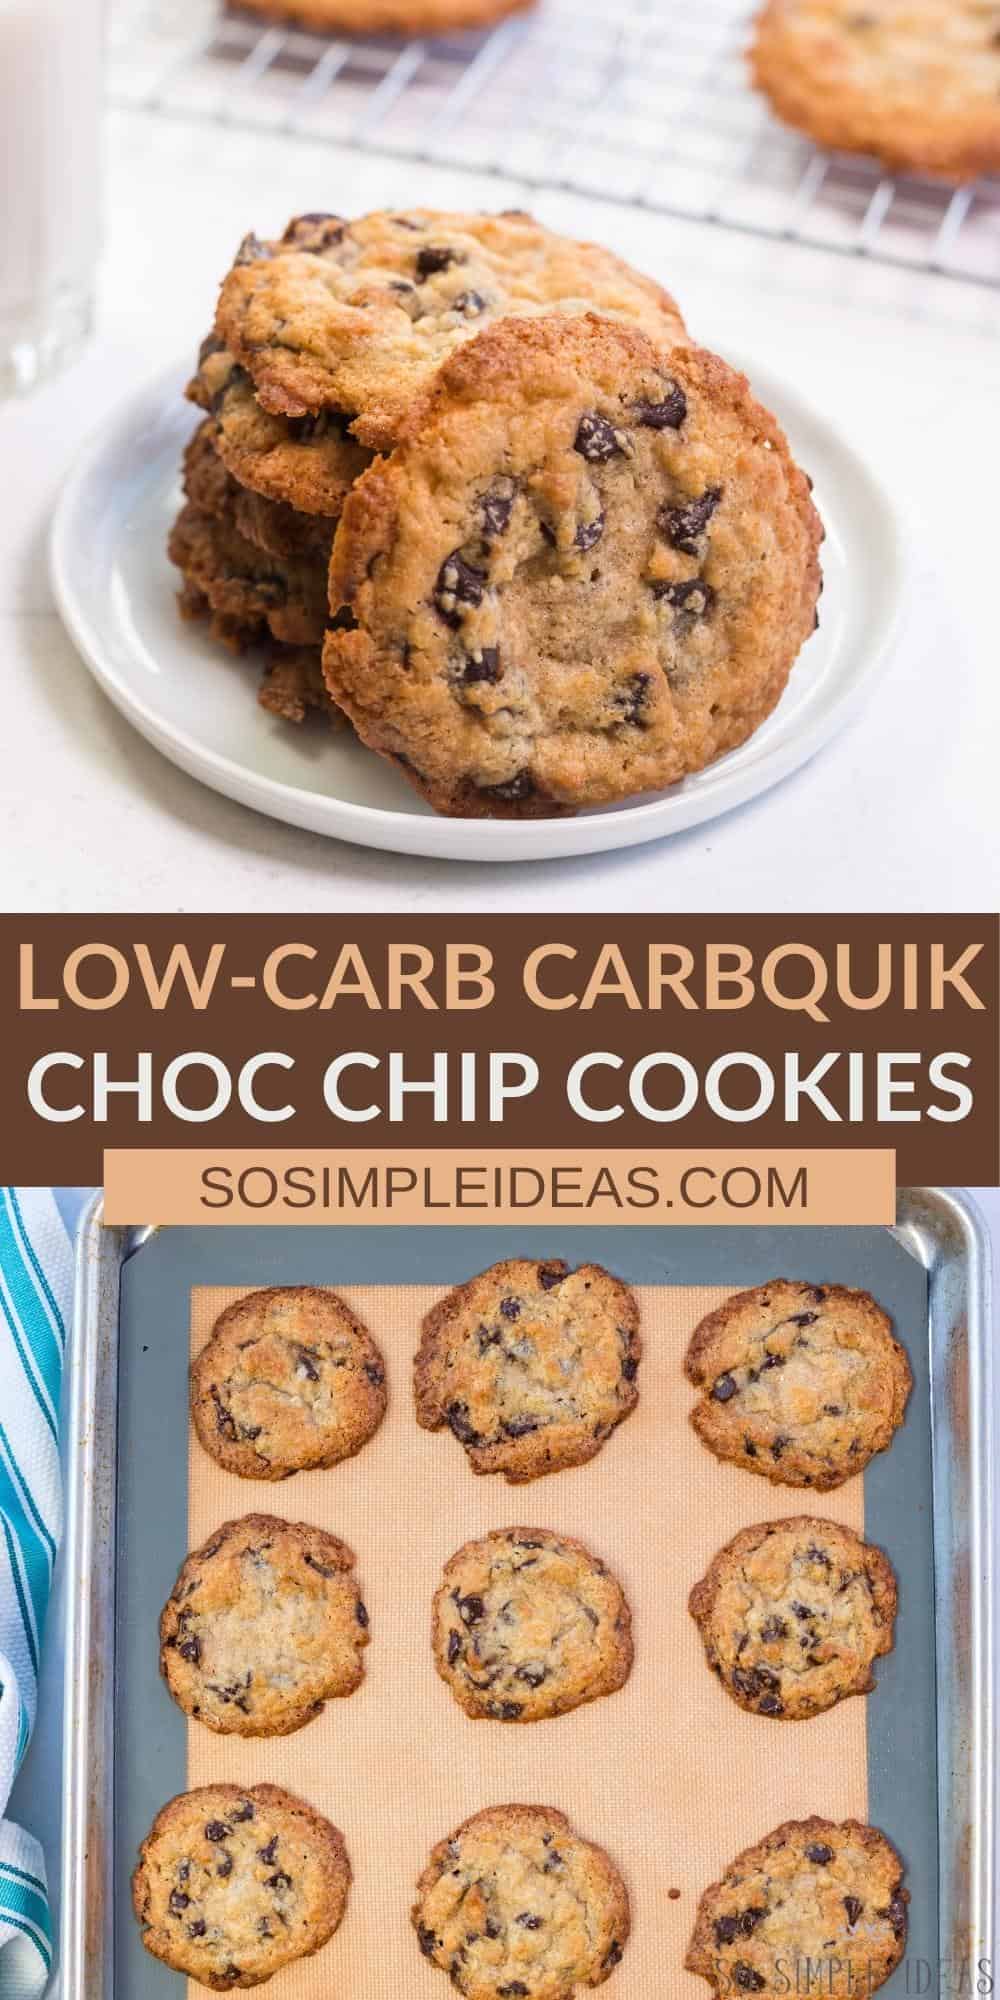 carbquik chocolate chip cookies pinterest image.